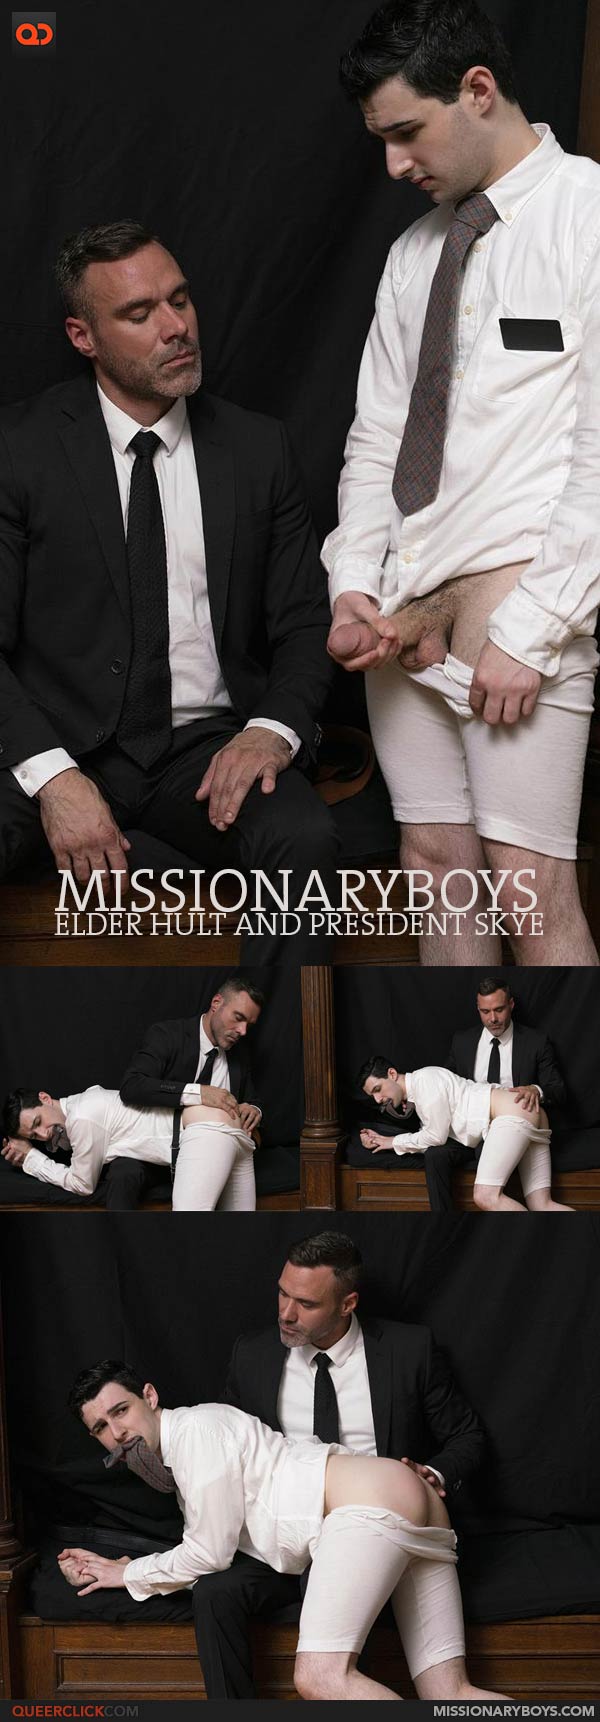 Missionary Boys: Elder Hult and President Skye